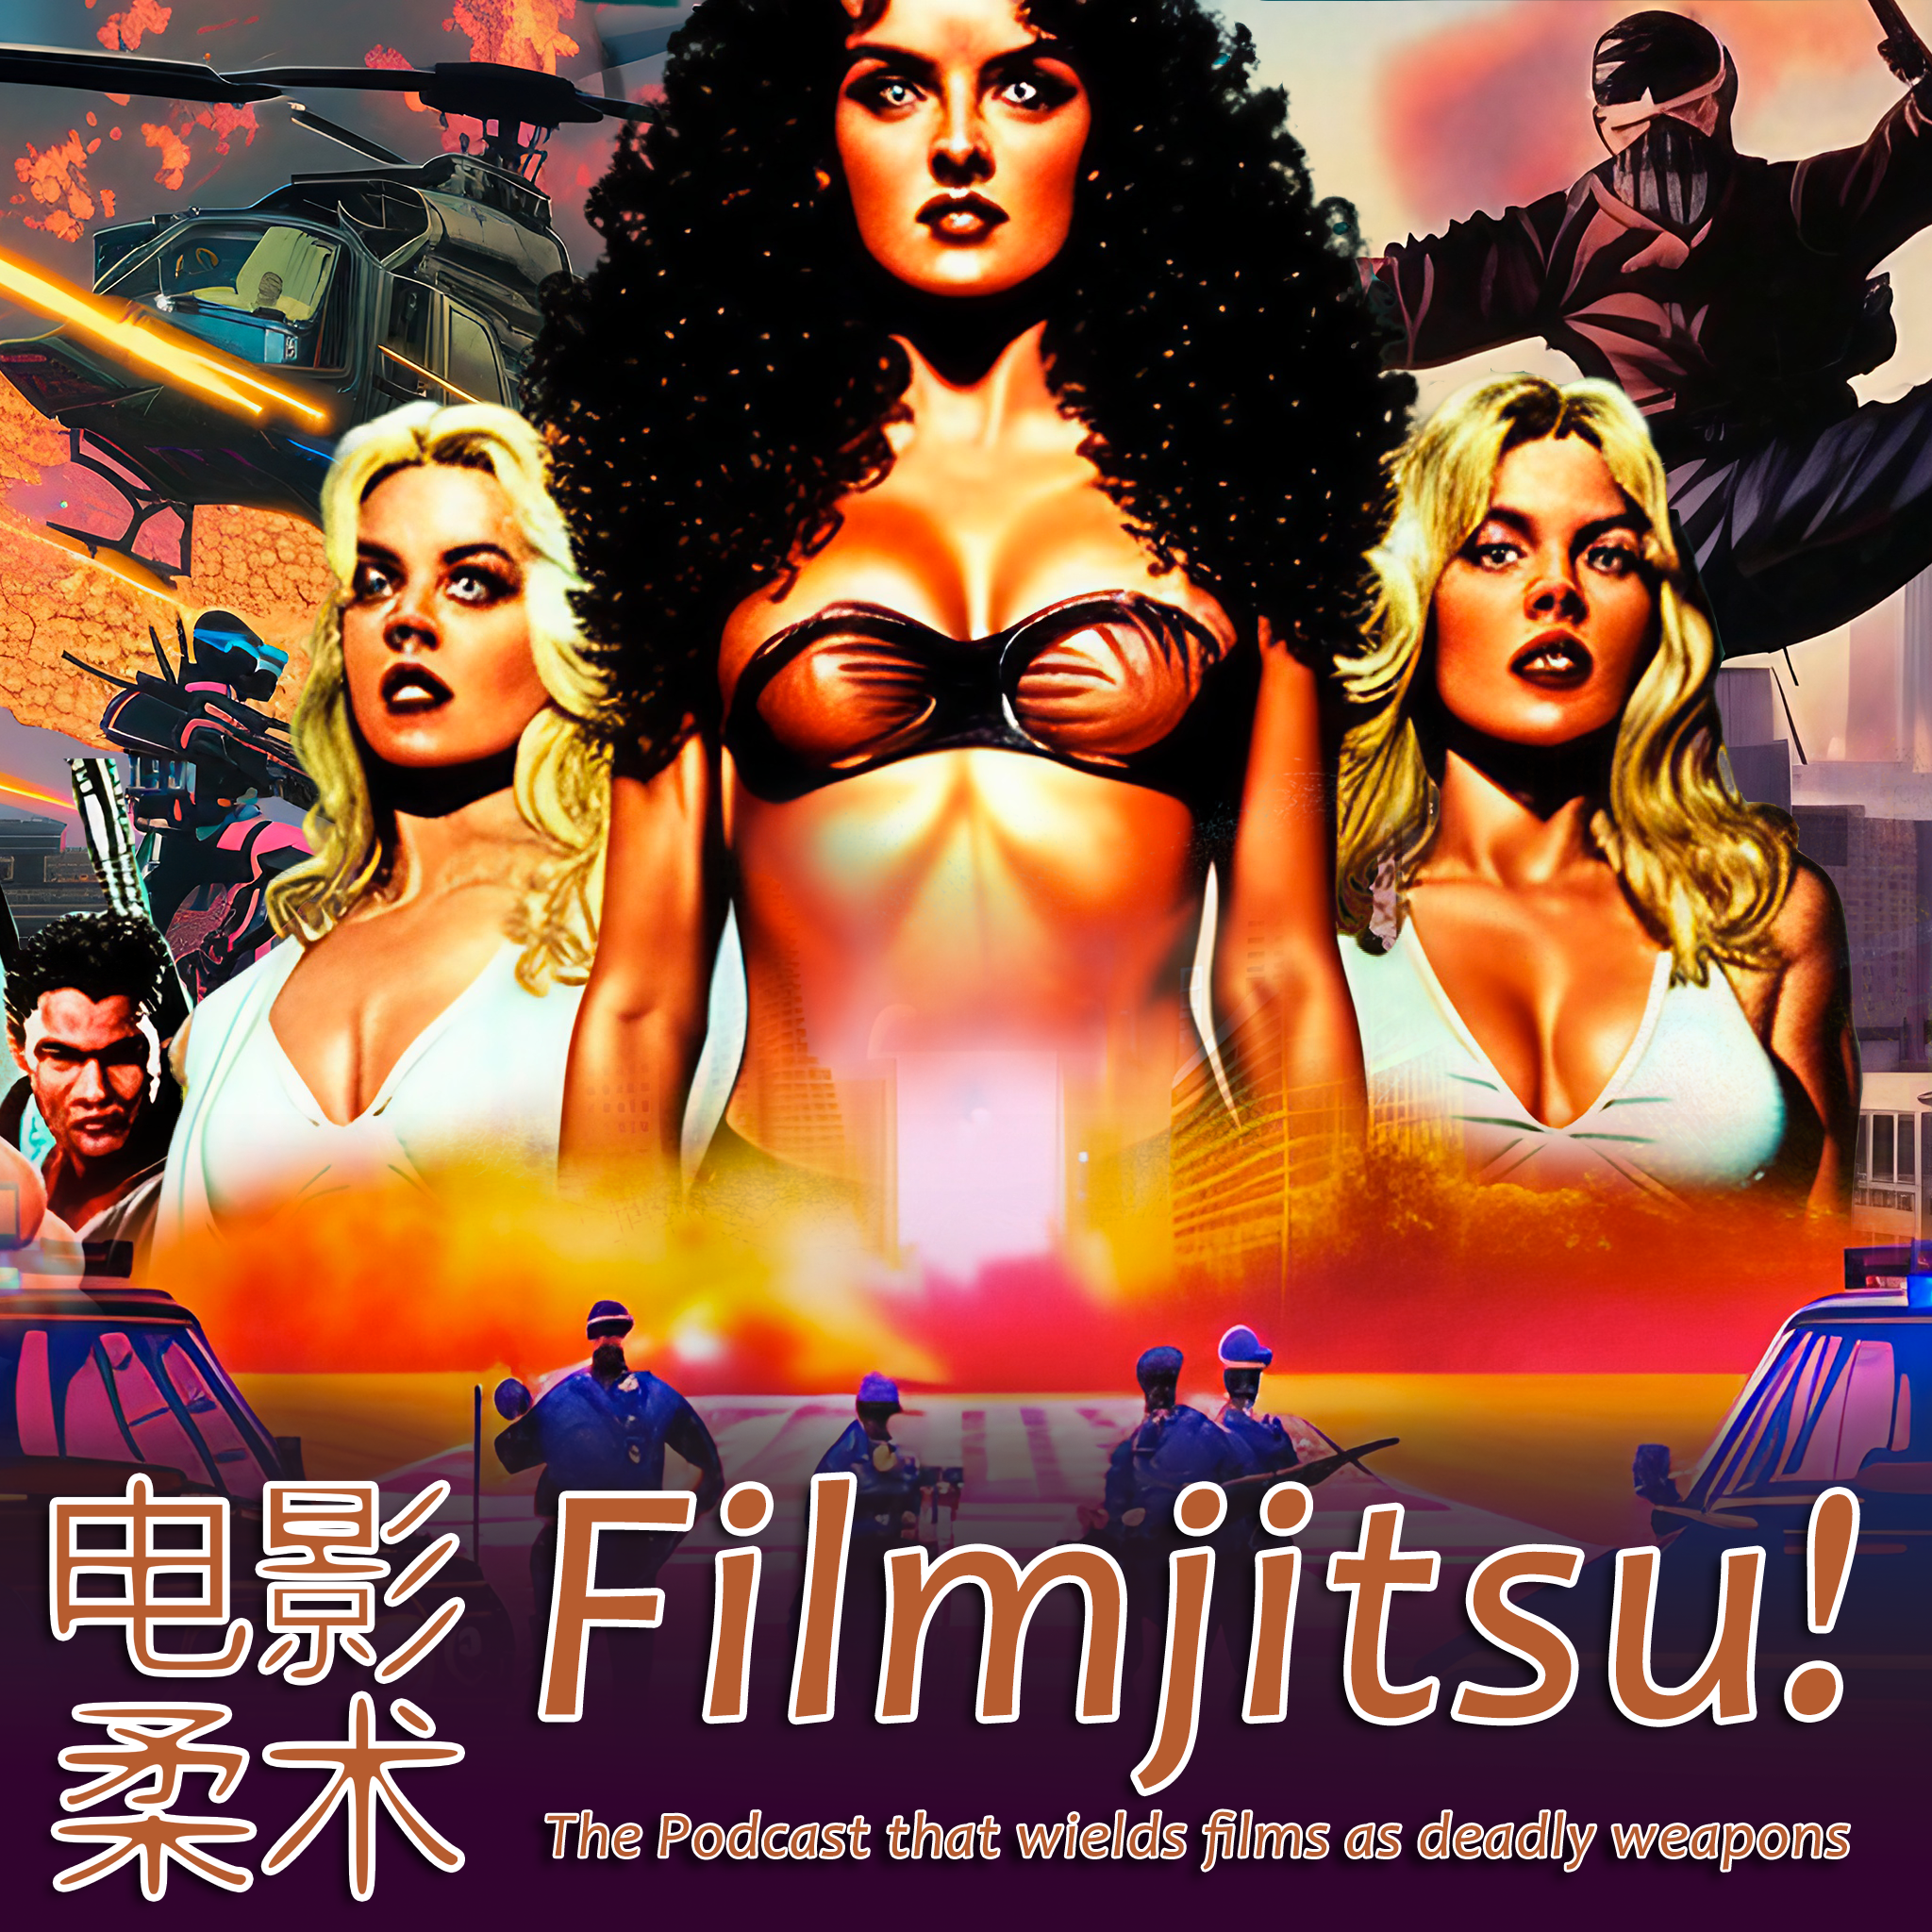 About Filmjitsu